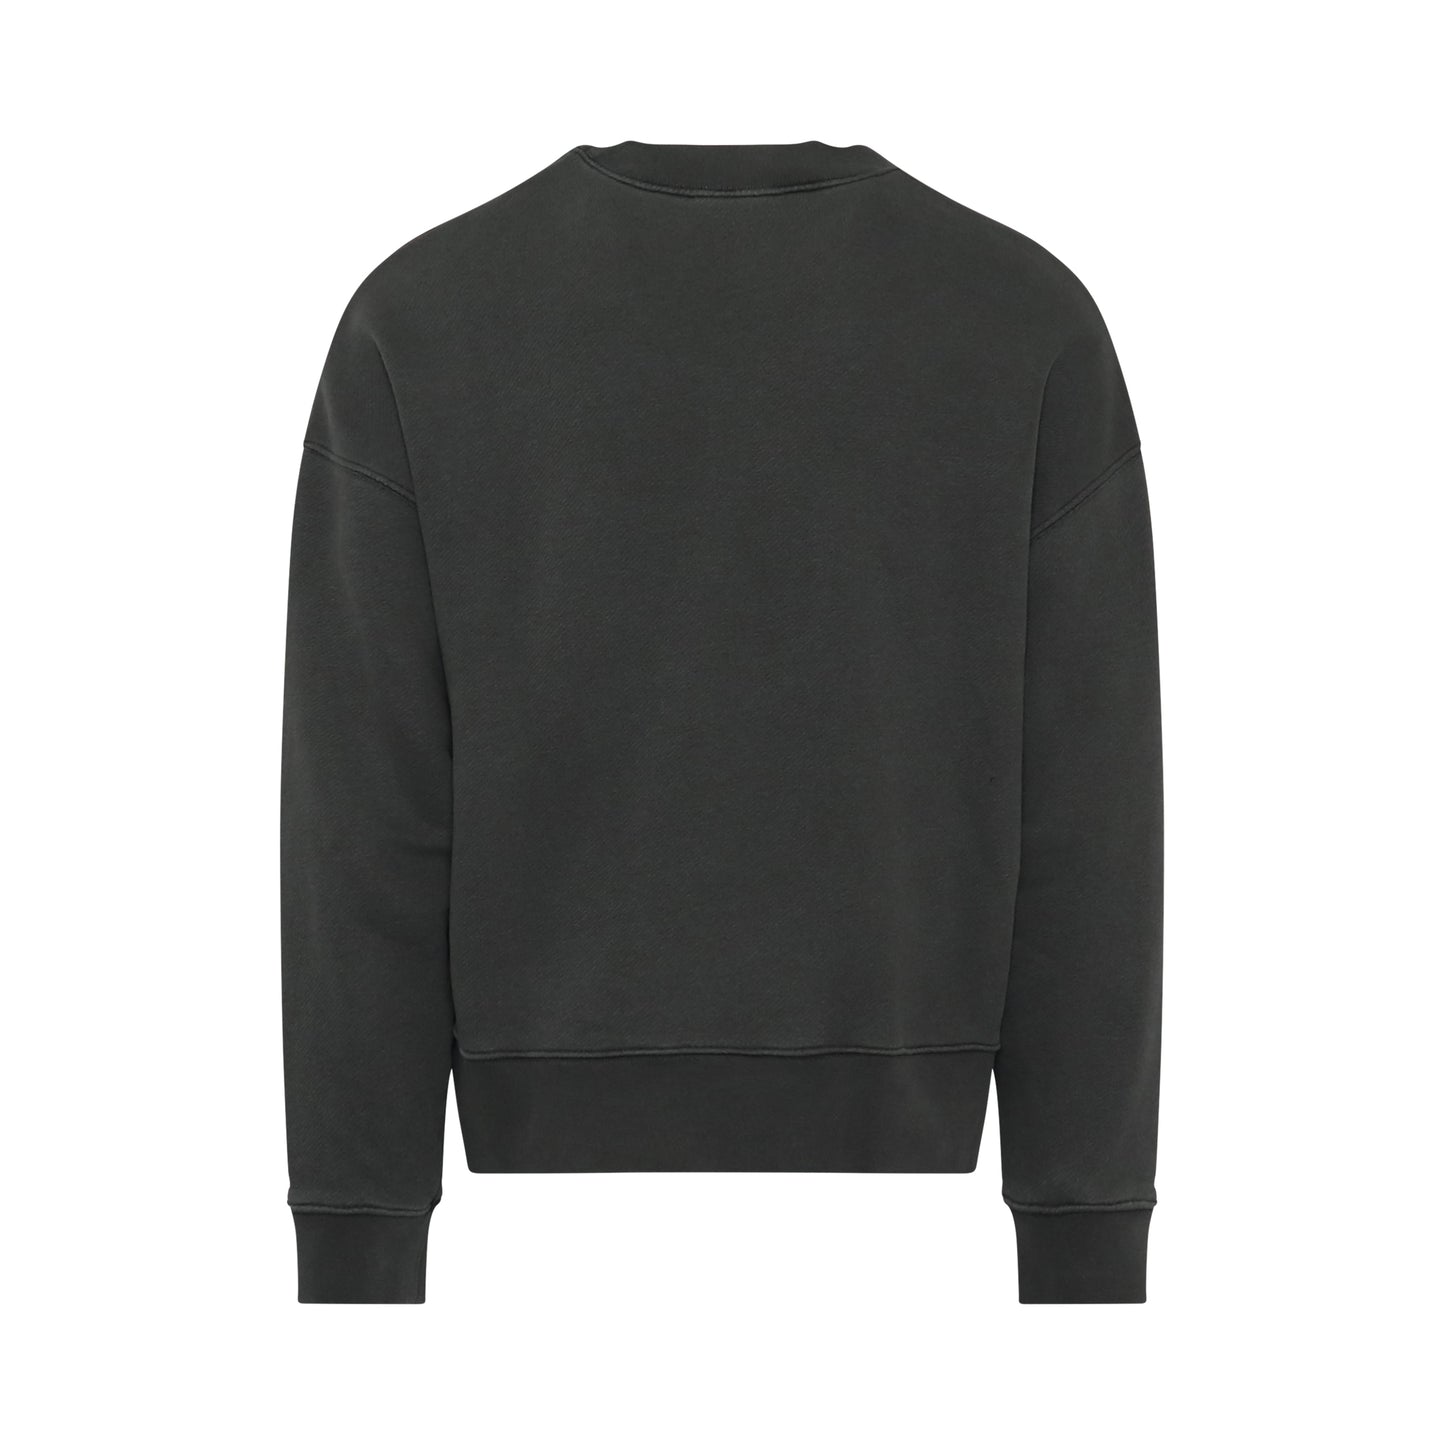 Gd Curved Logo Sweatshirt in Black